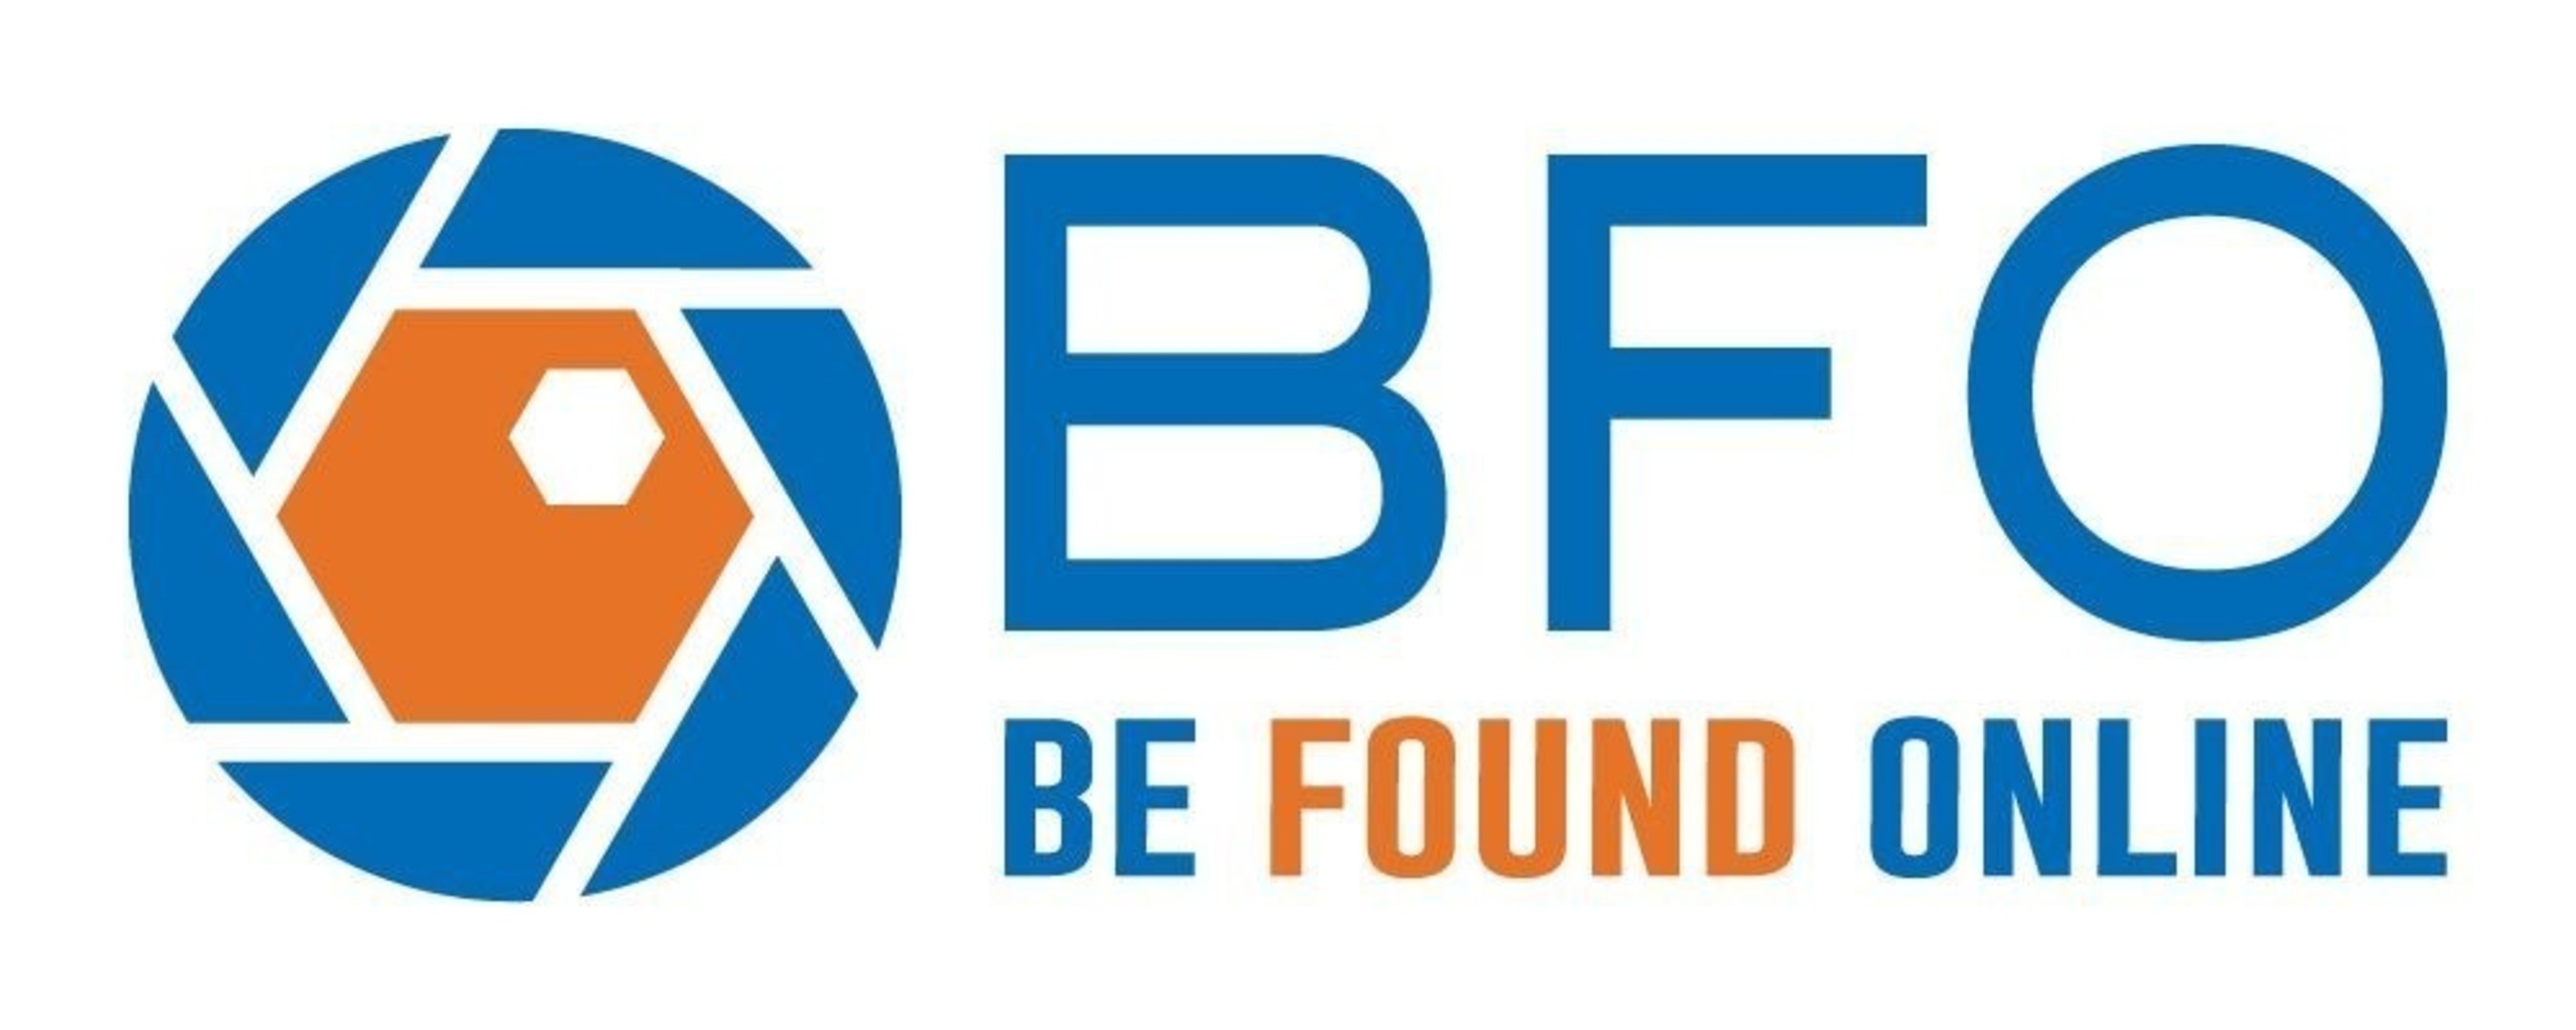 BFO Logo (PRNewsFoto/B2B Marketing Lab) (PRNewsFoto/B2B Marketing Lab)